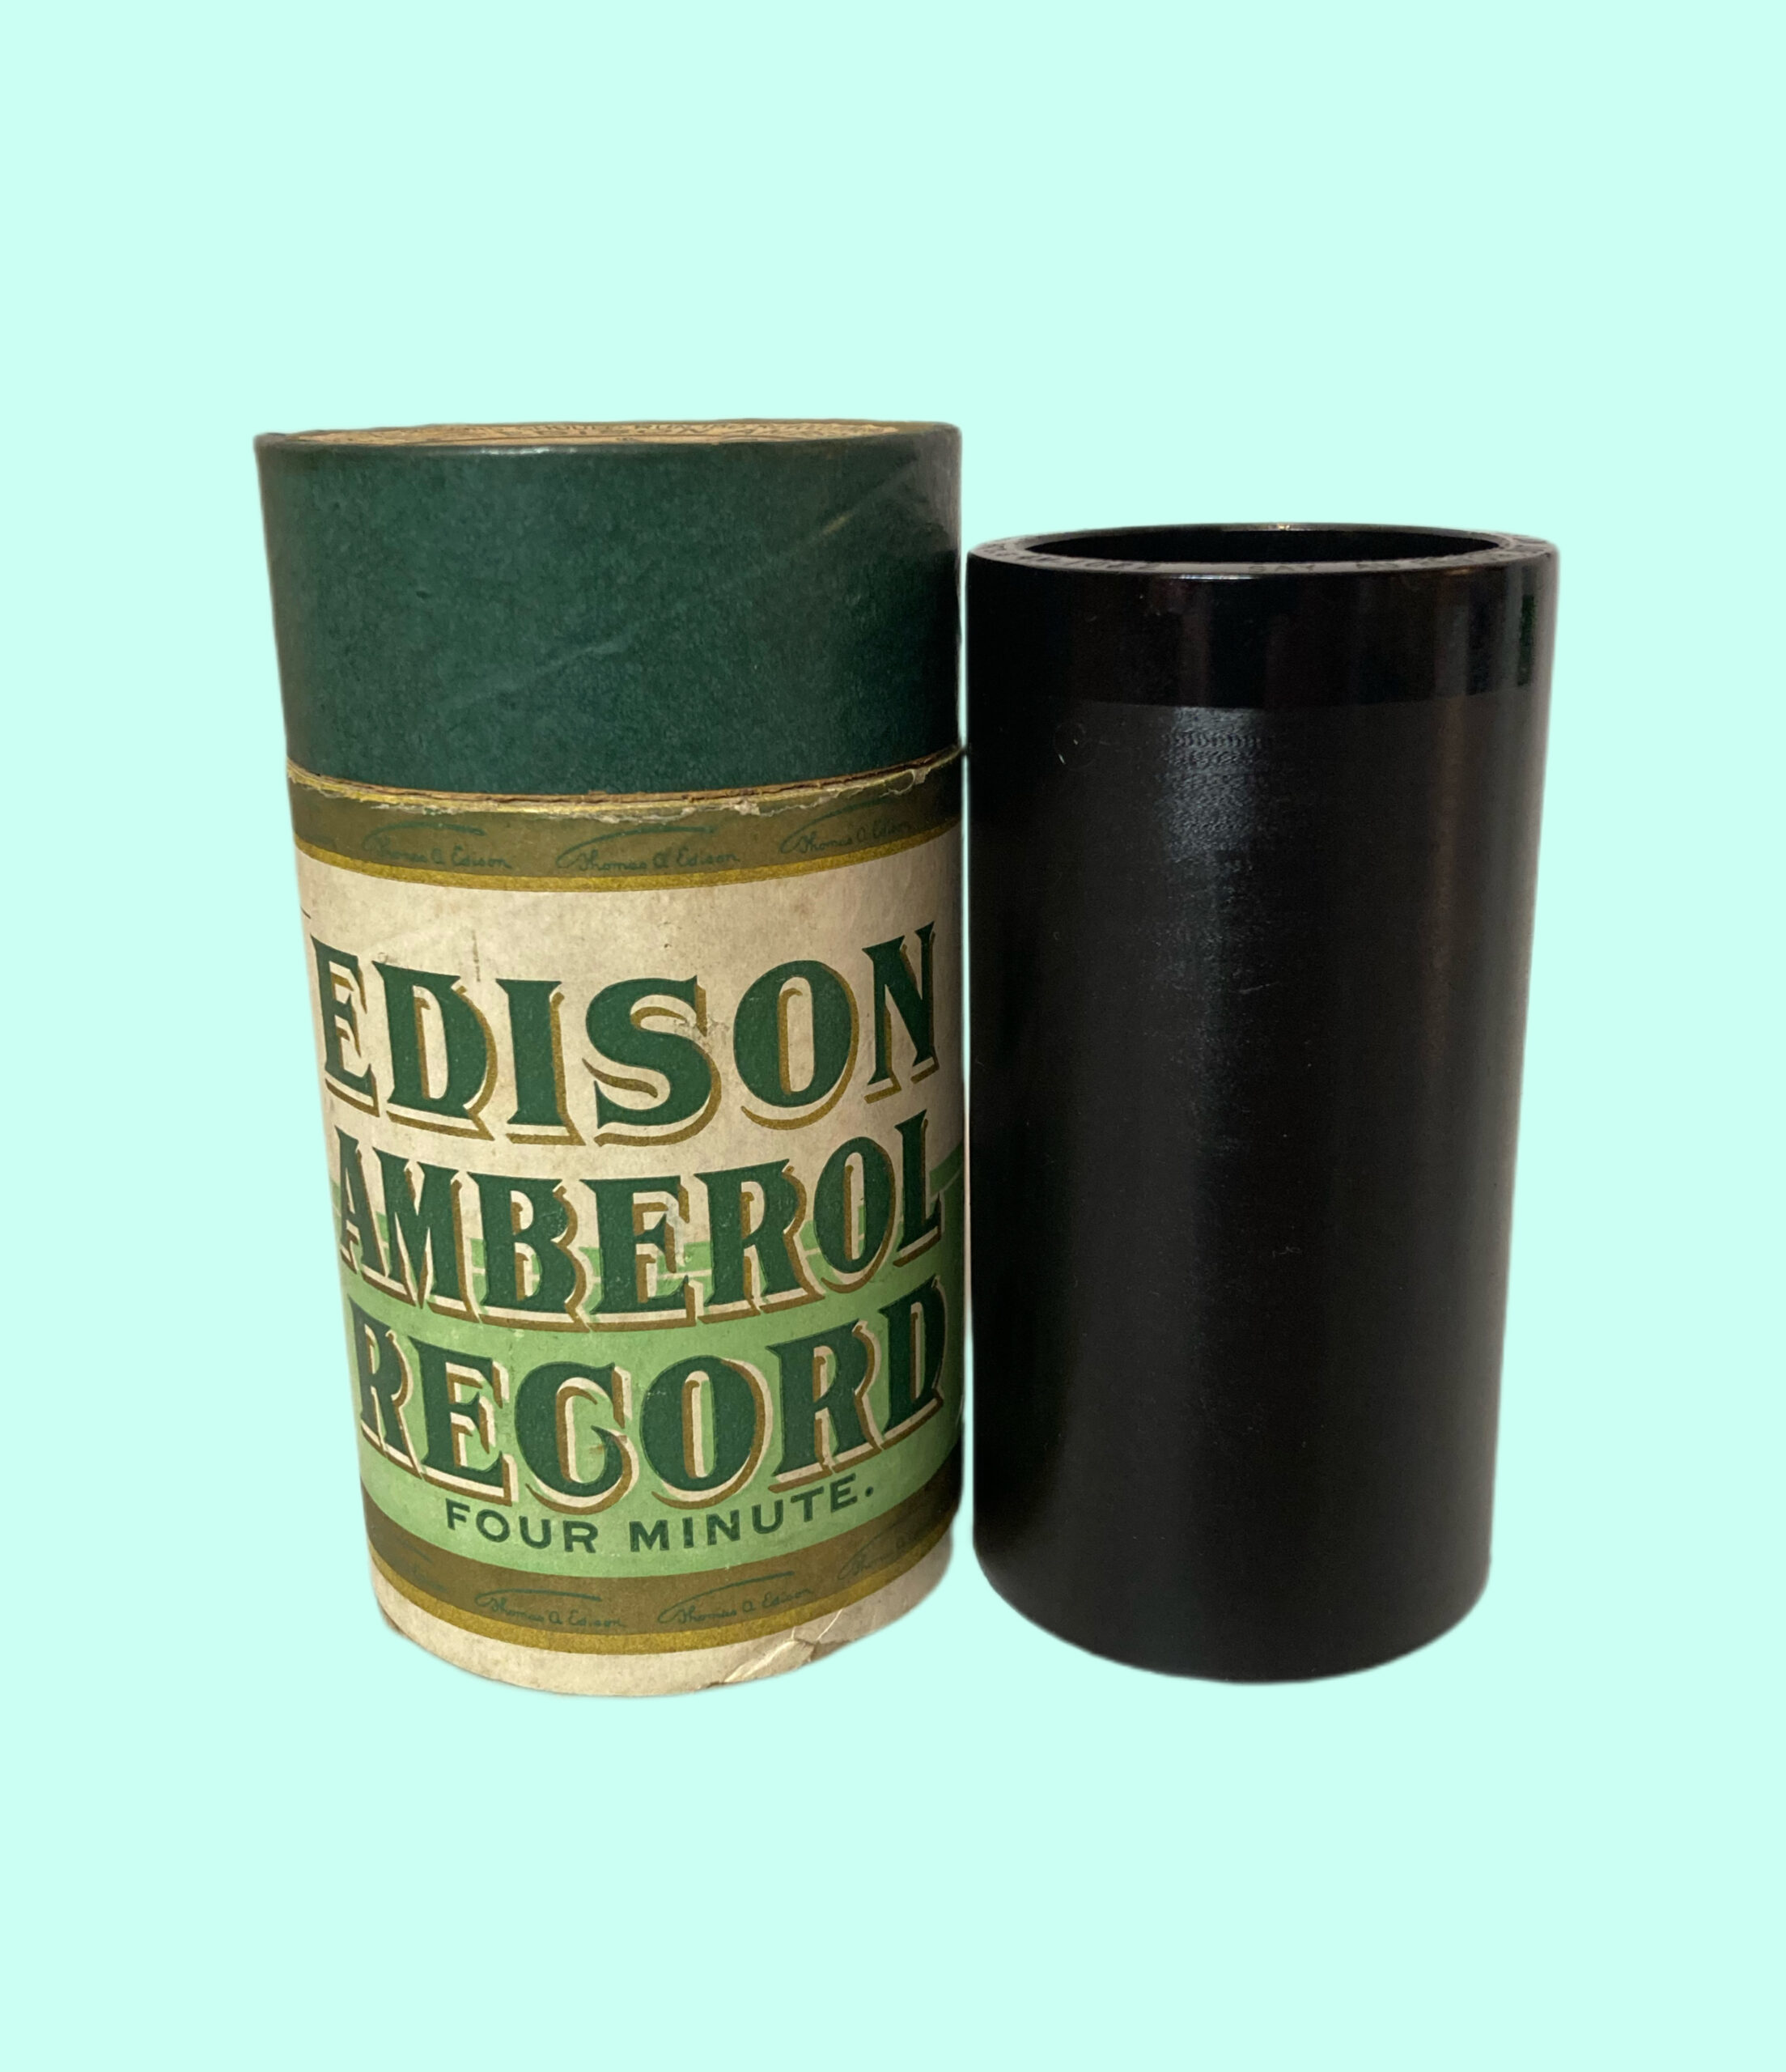 Edison 4 min. Cylinder… “ Rockin’ in De Win’“… Excellent Song!